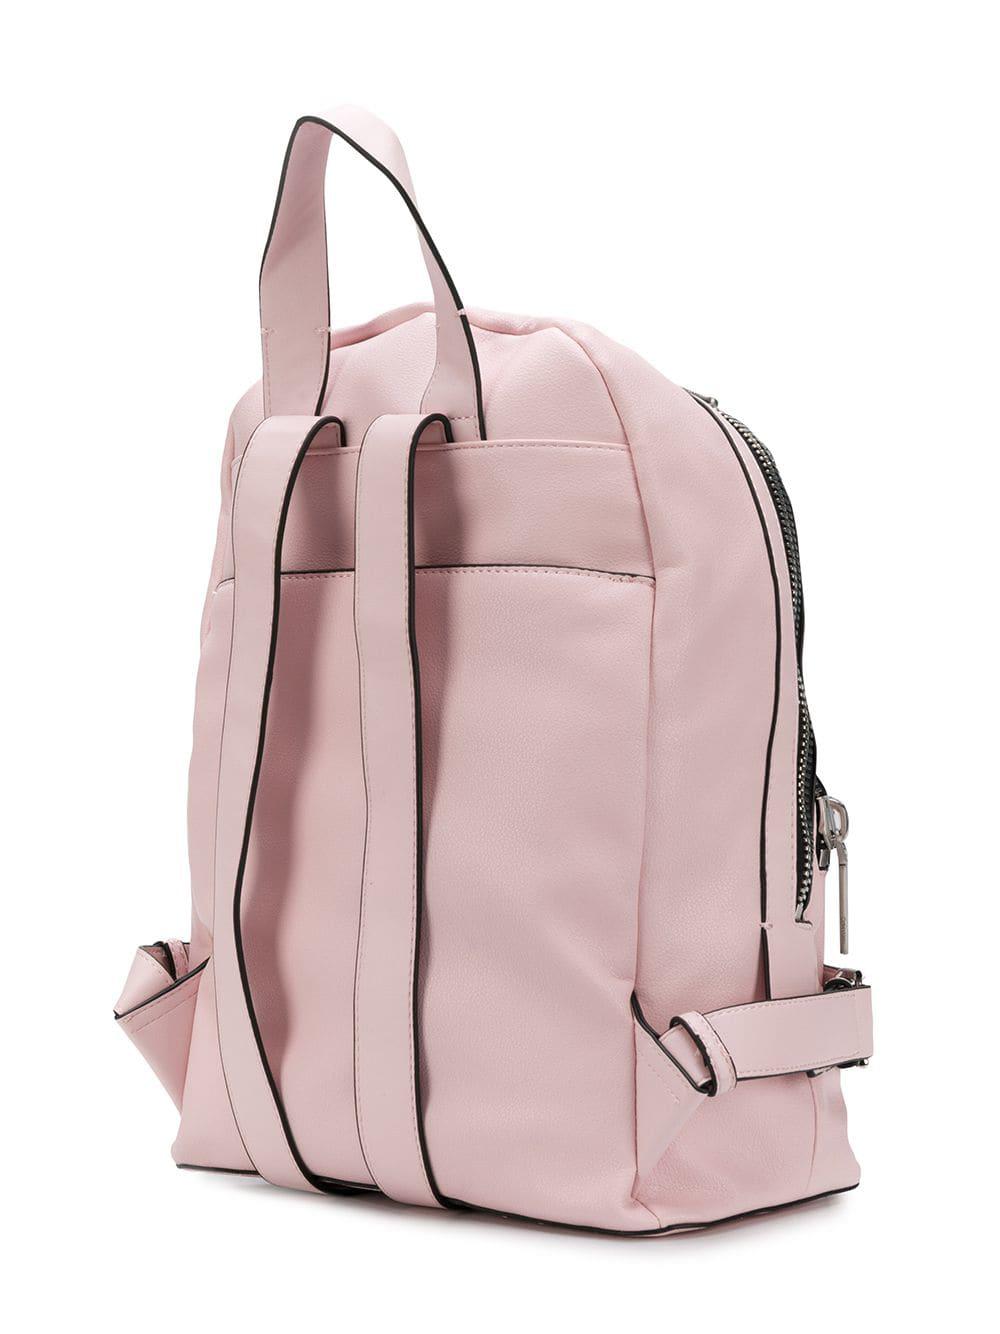 Calvin Klein Branded Backpack in Pink - Lyst